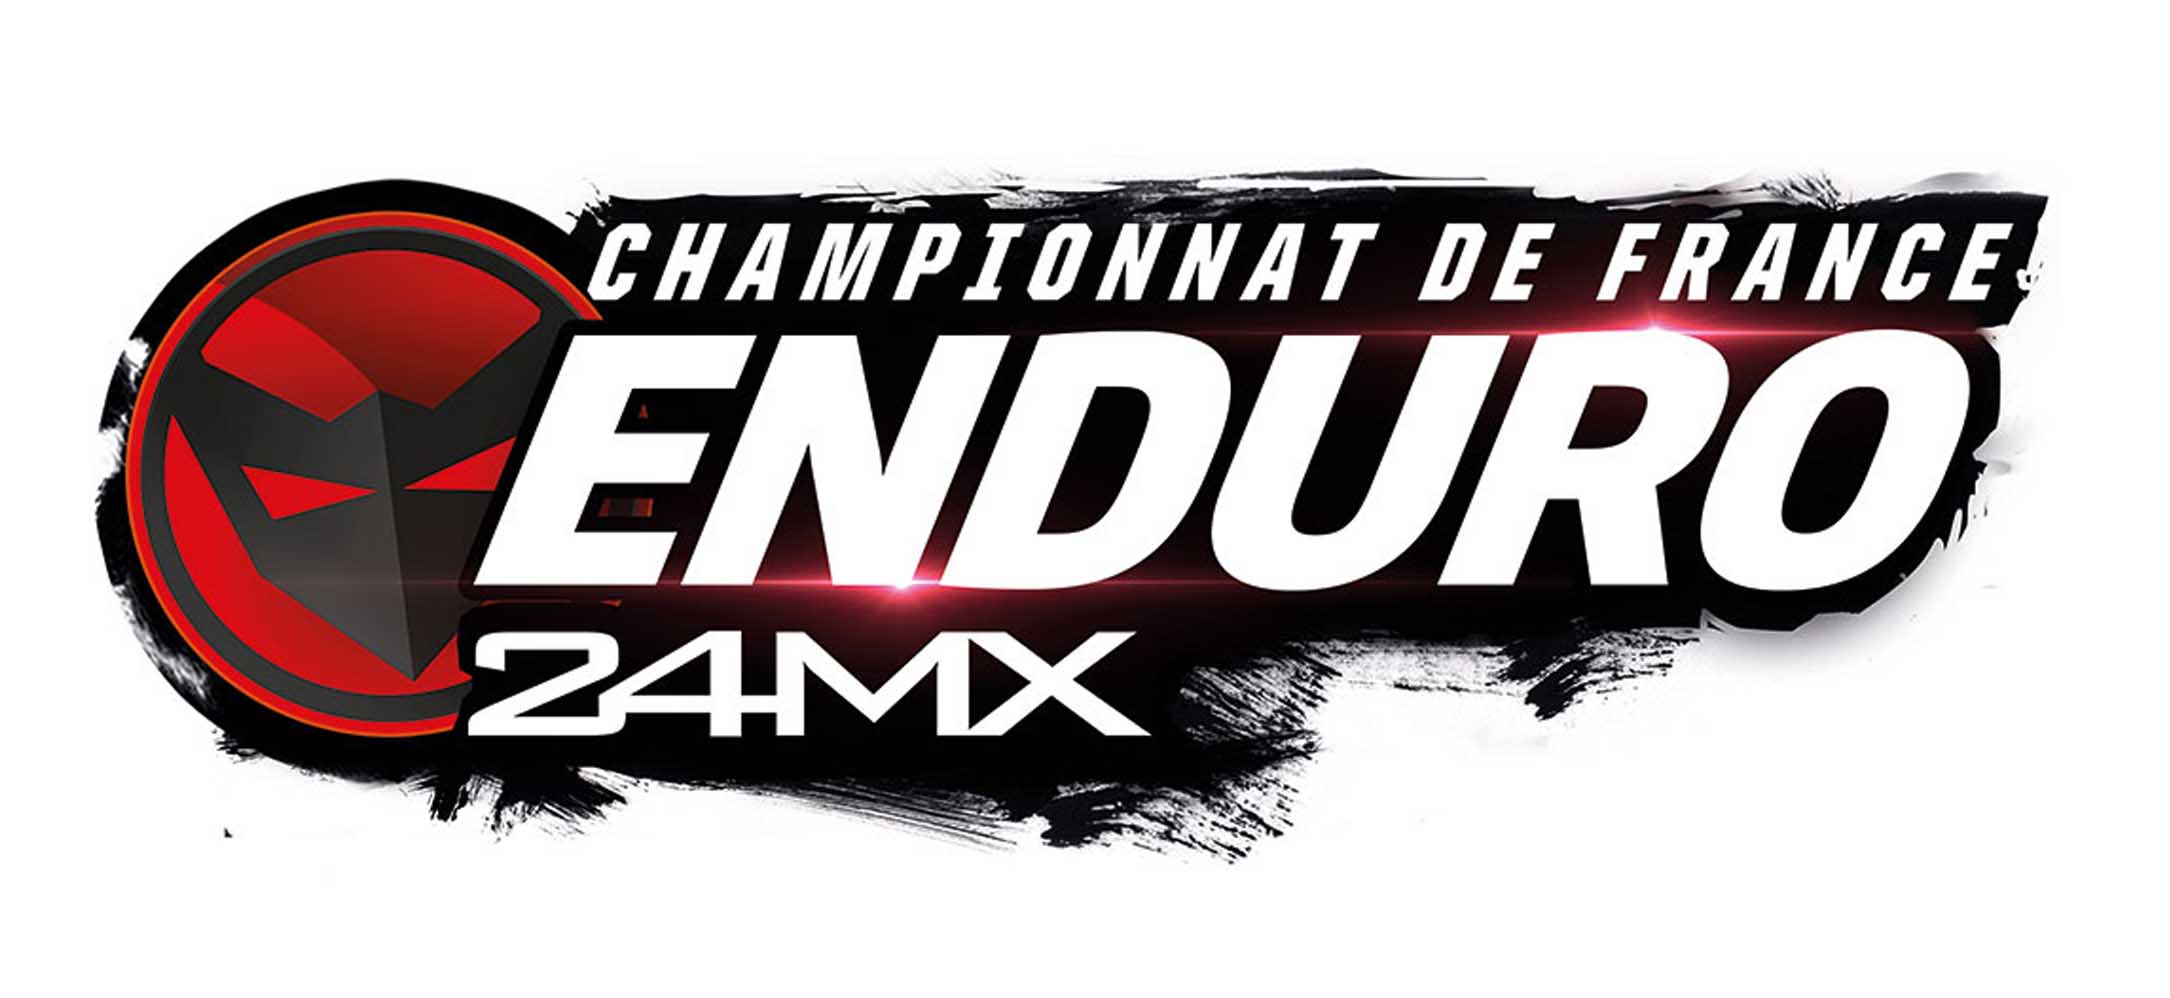 MC Angérien, Championnat de France Enduro 24MX